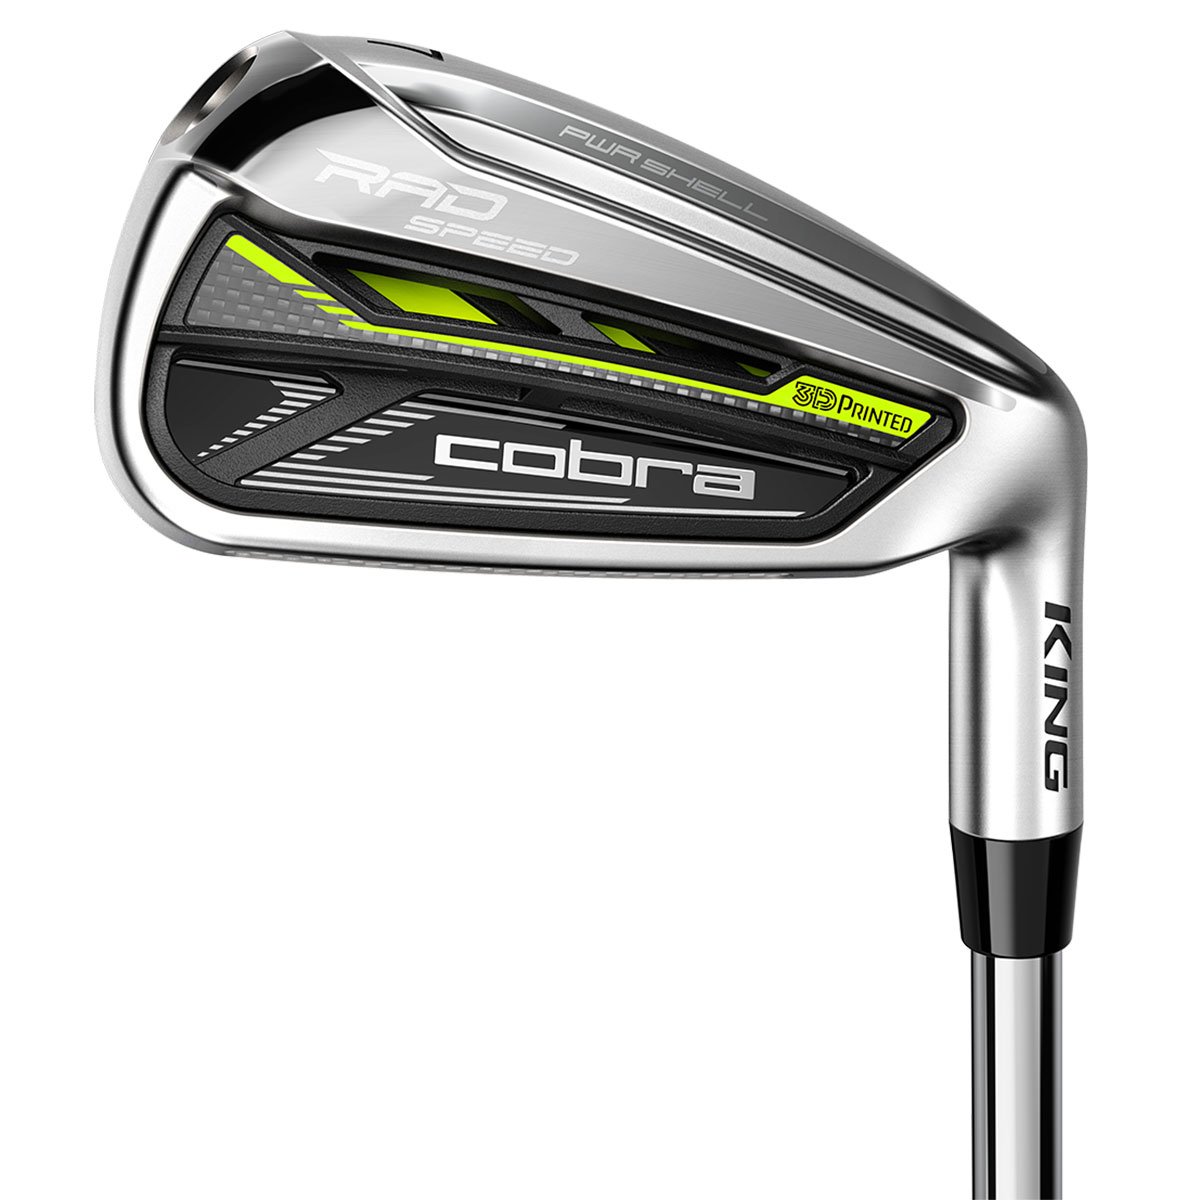 Cobra golf irons